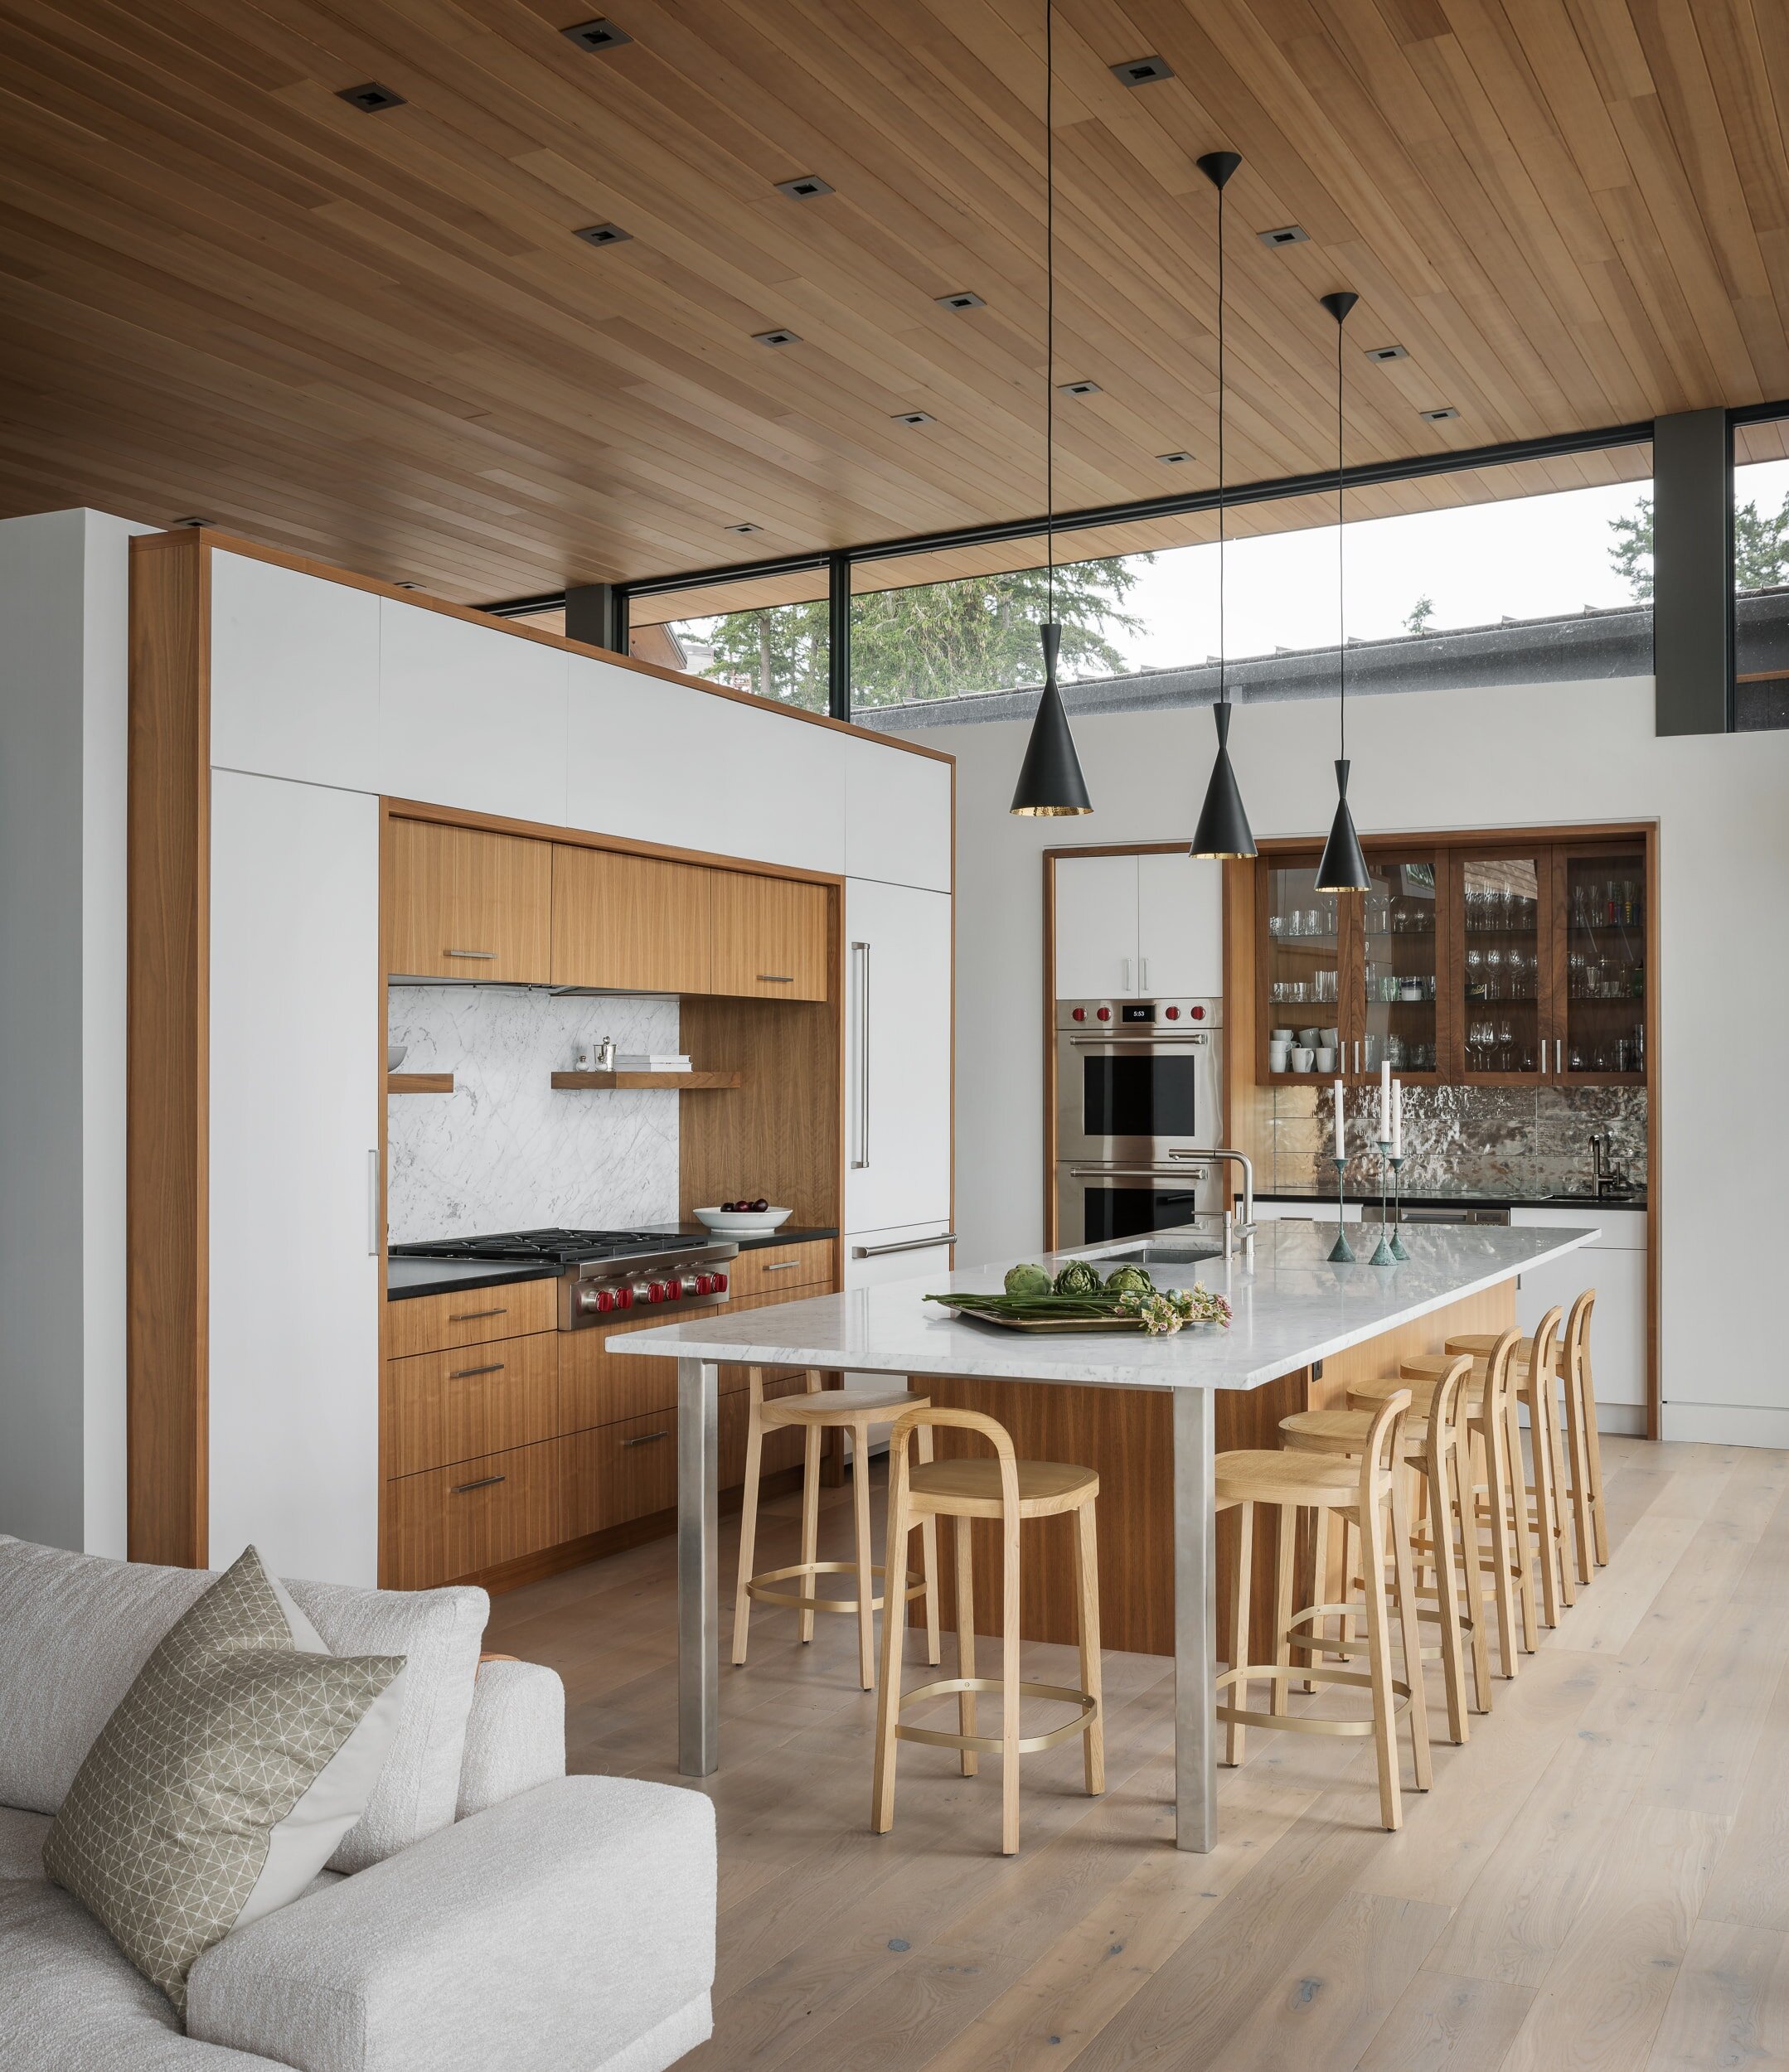 designer space-saving kitchen installed inside open format living area